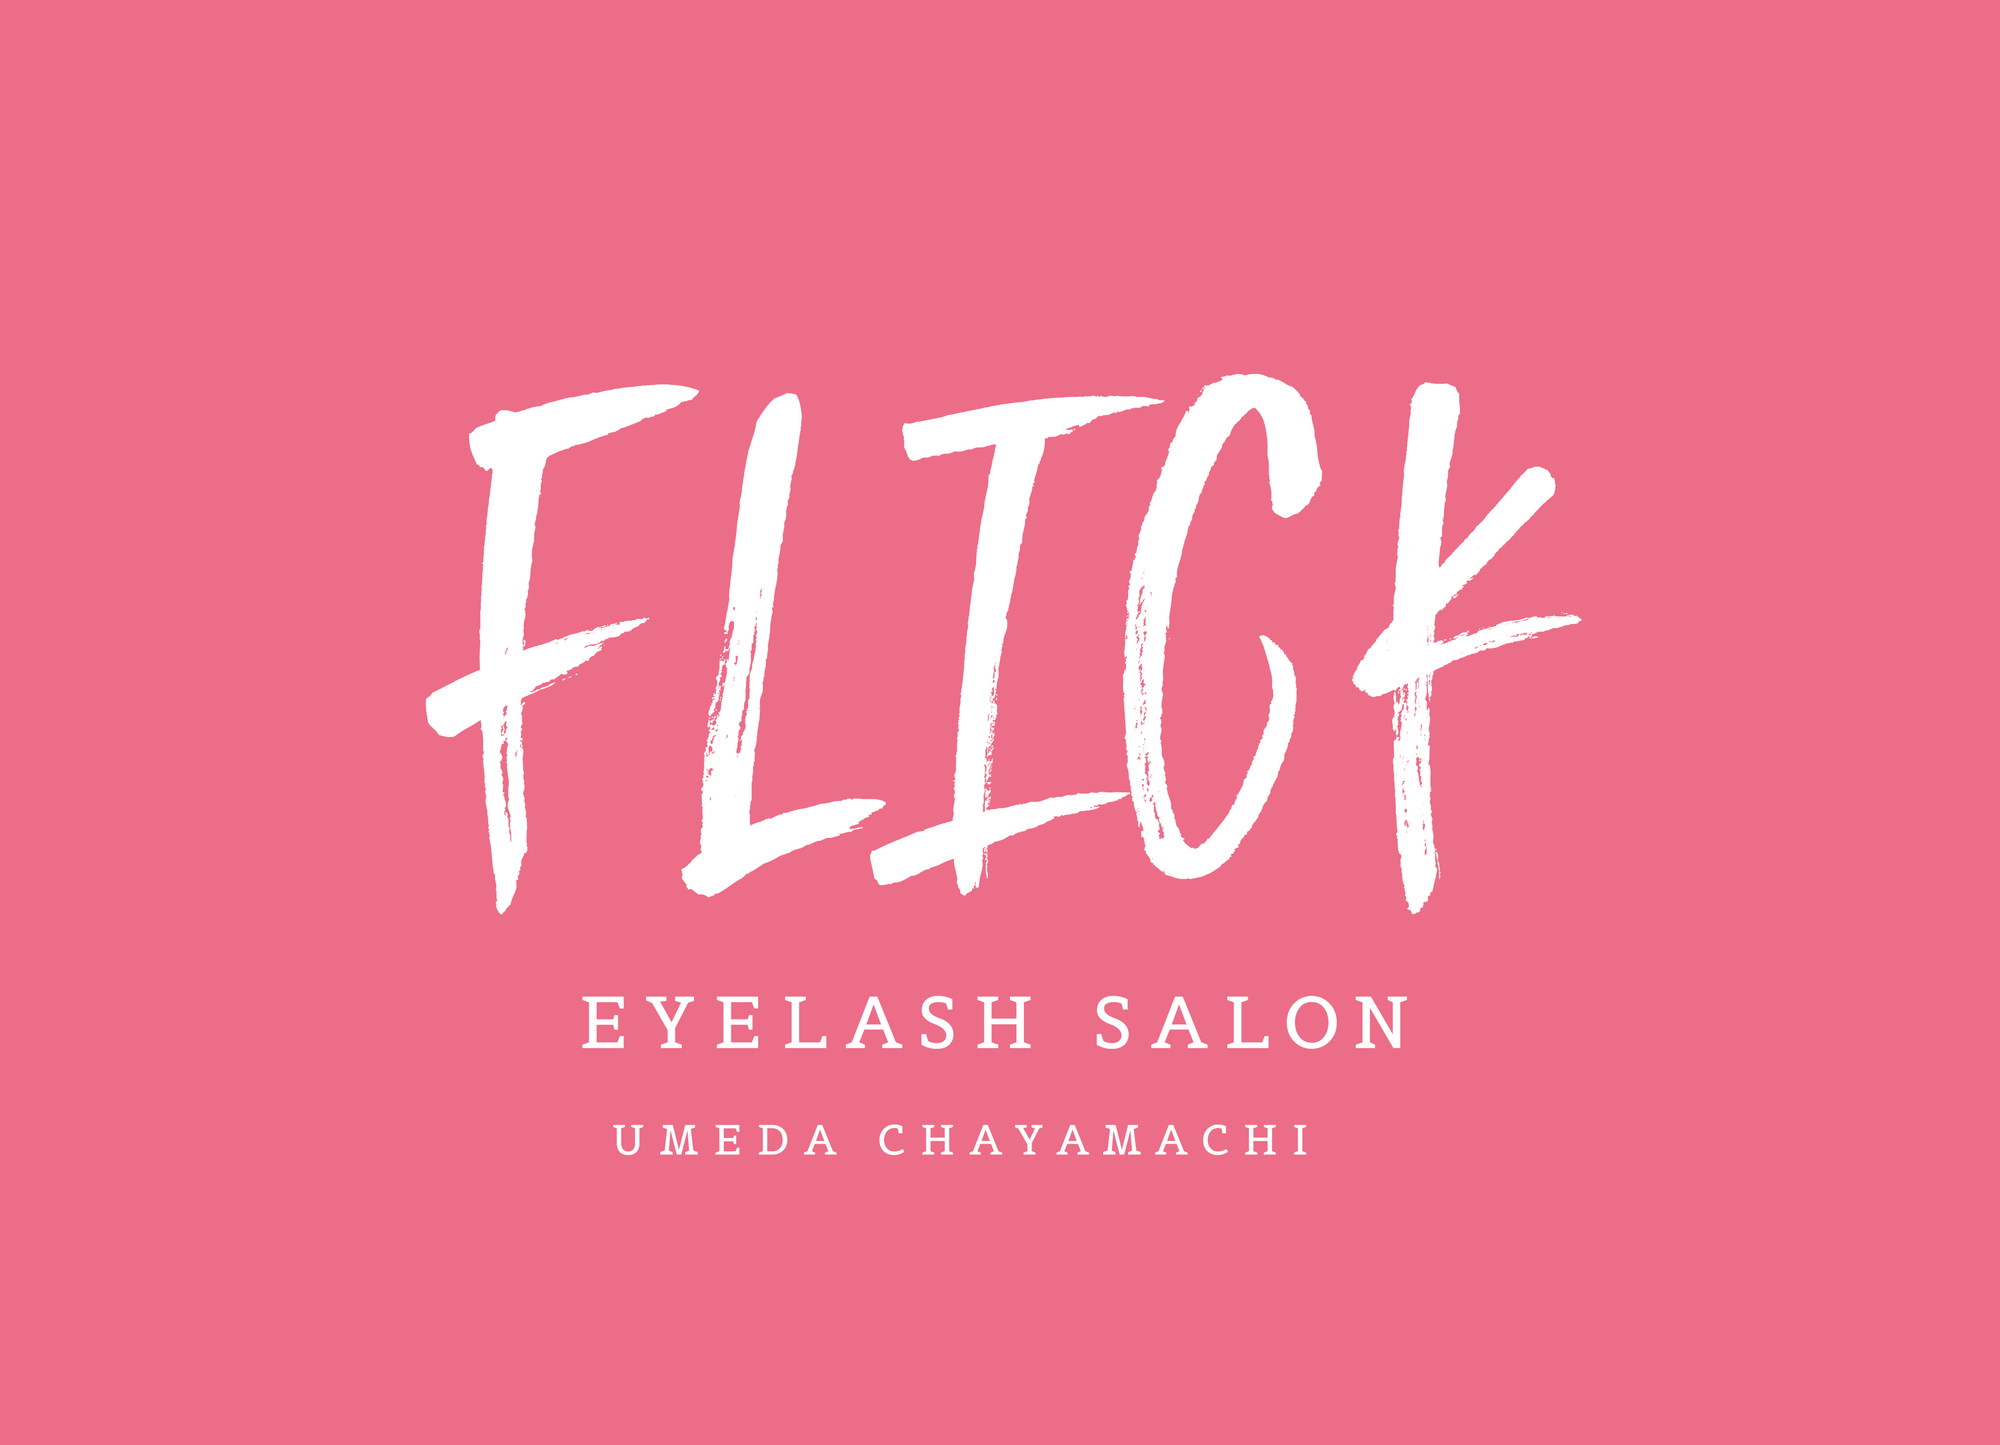 FLICK EYELASH